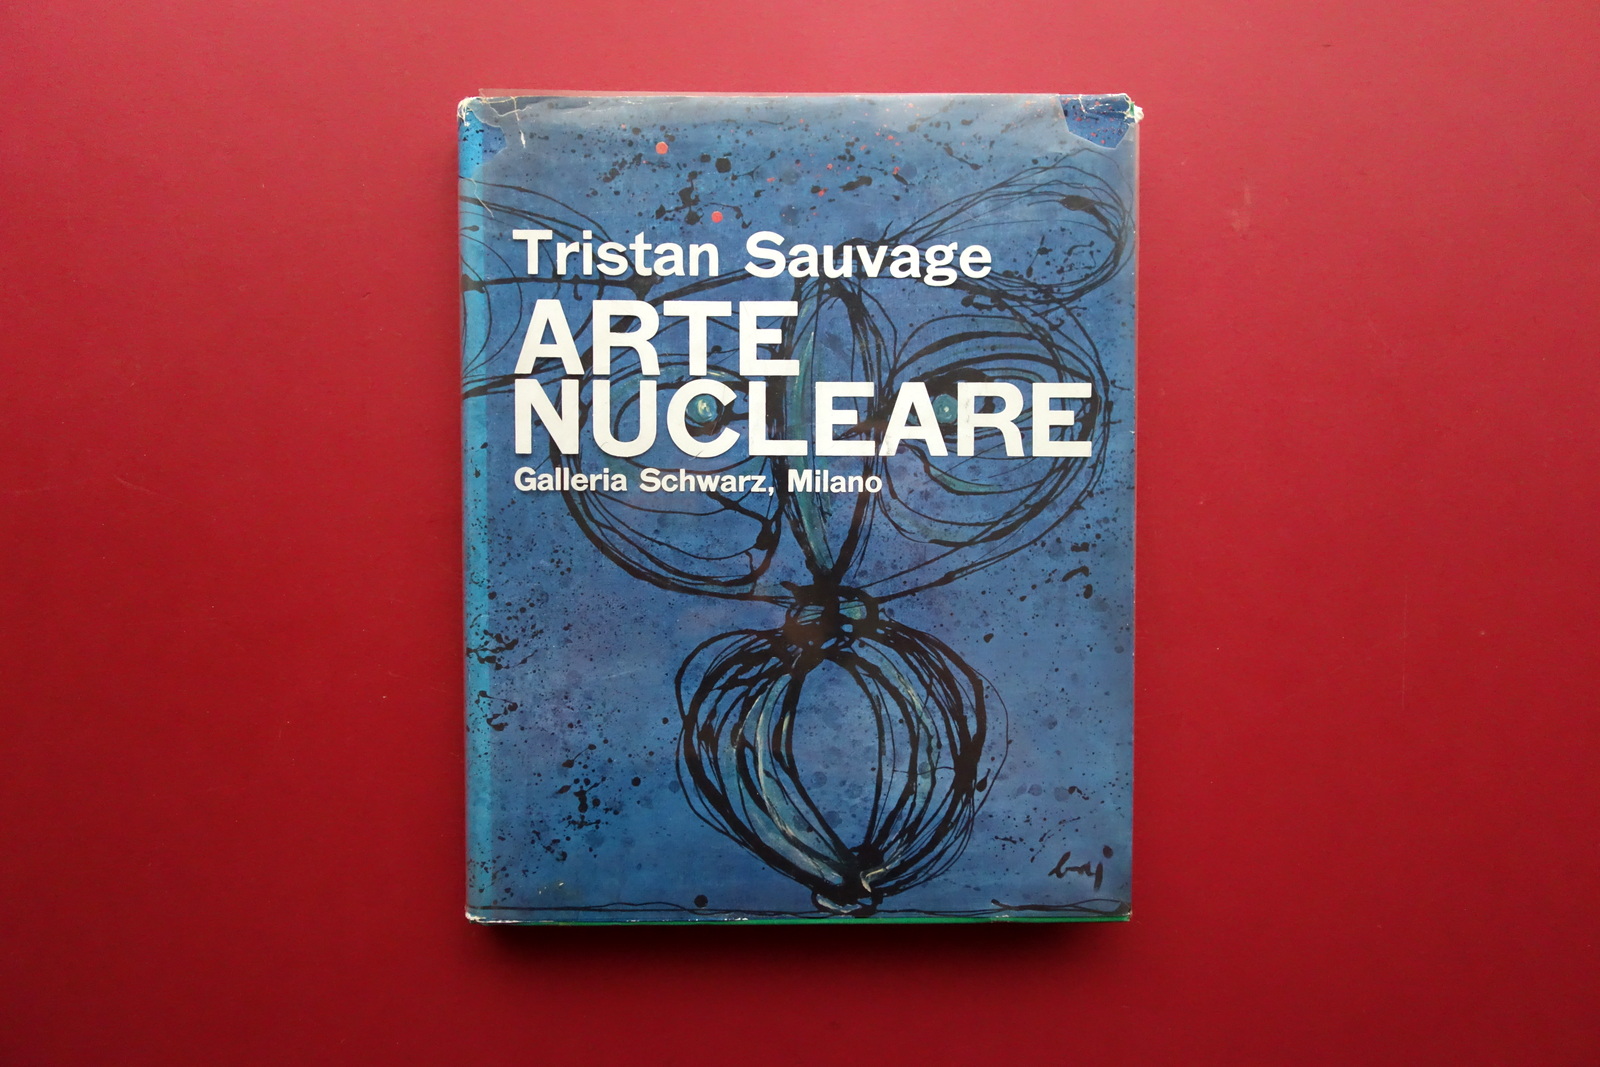 Tristan Sauvage Arte Nucleare Galleria Schwarz Milano 1962 Raro Baj Dangelo